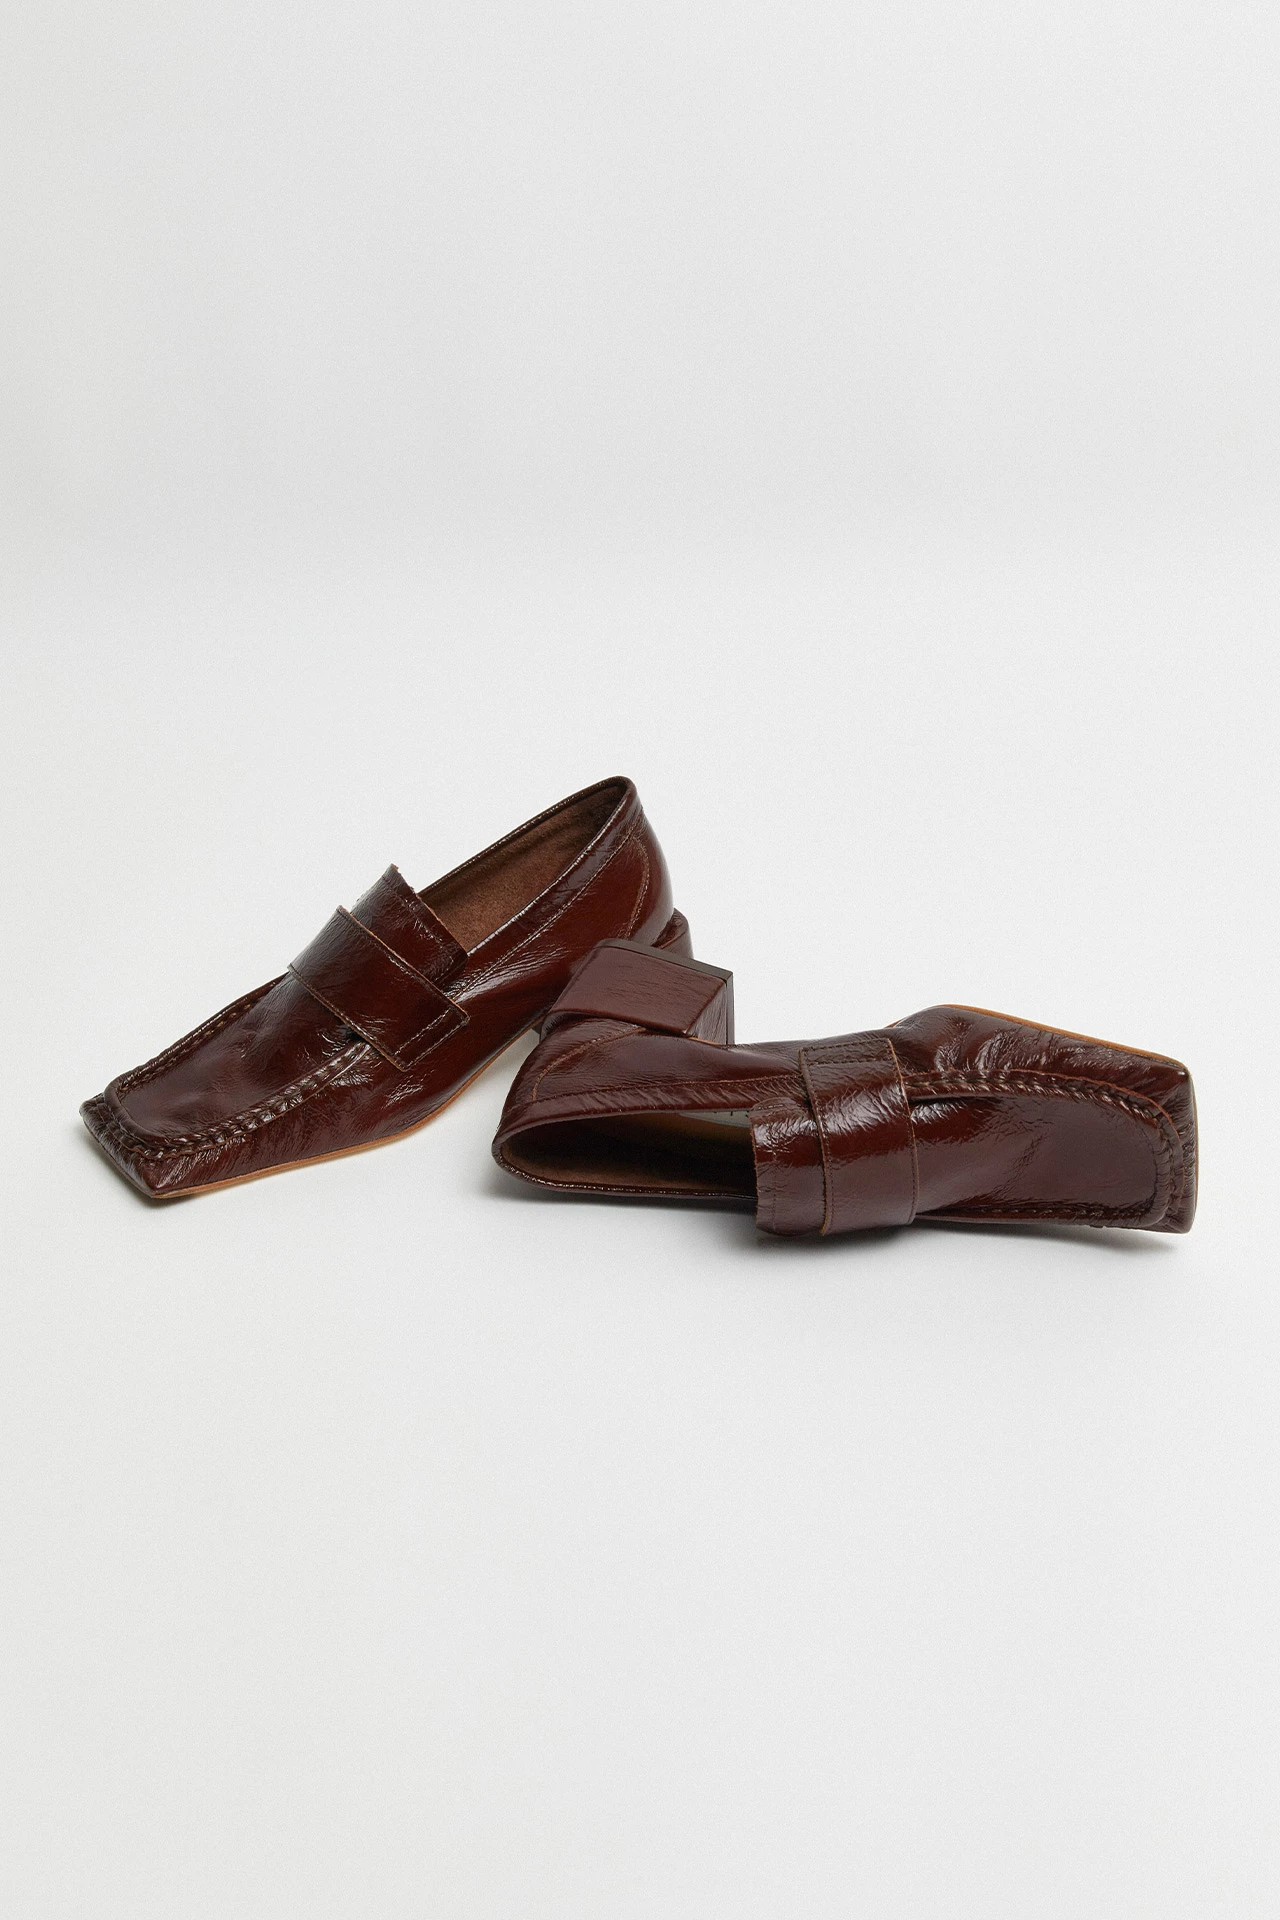 Miista-serena-brown-patent-loafers-02